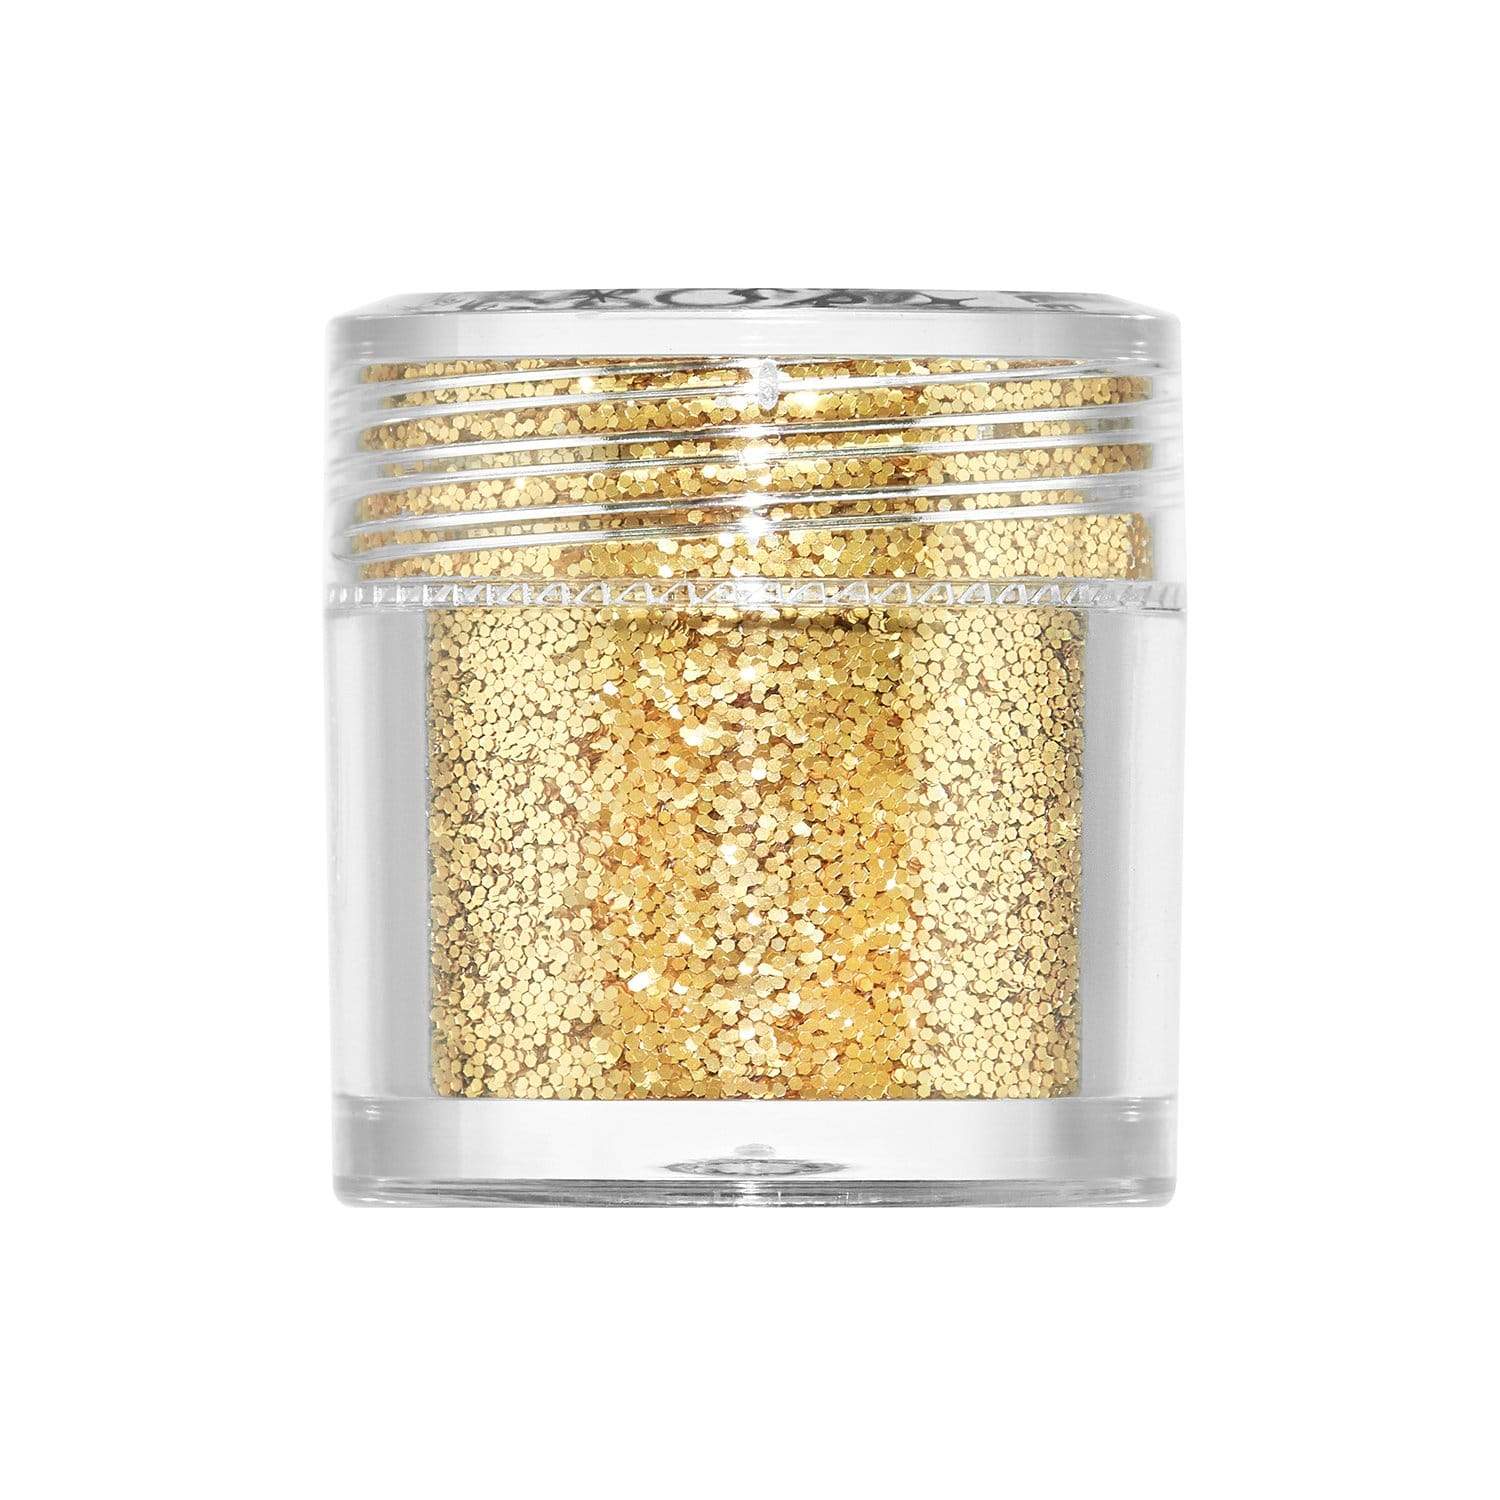 Barry M Body Glitter - Gold Mine